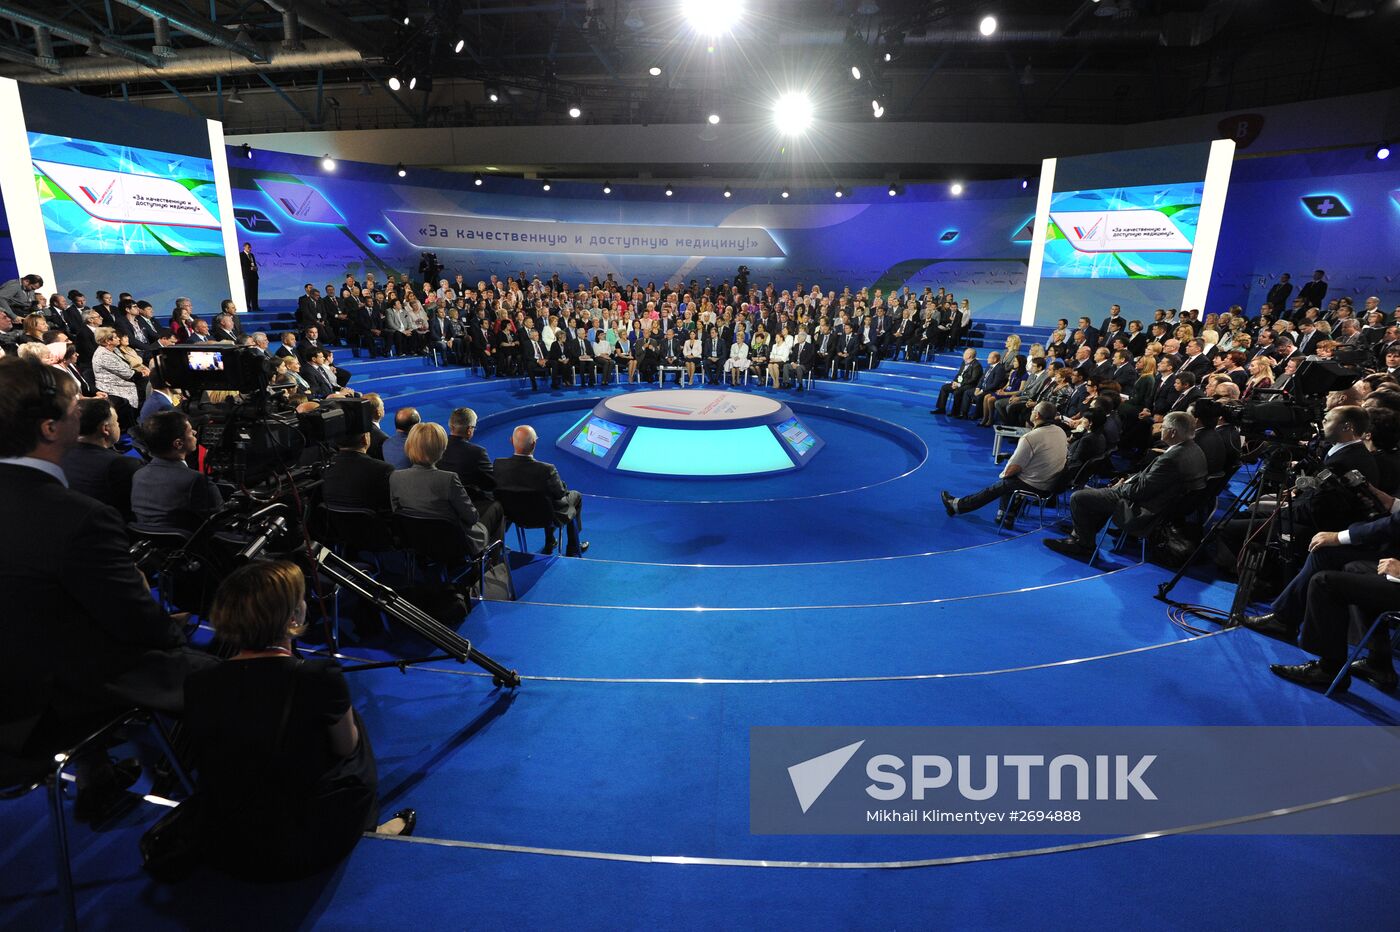 Russian President Vladimir Putin participates in plenary session of Russian Popular Front’s forum